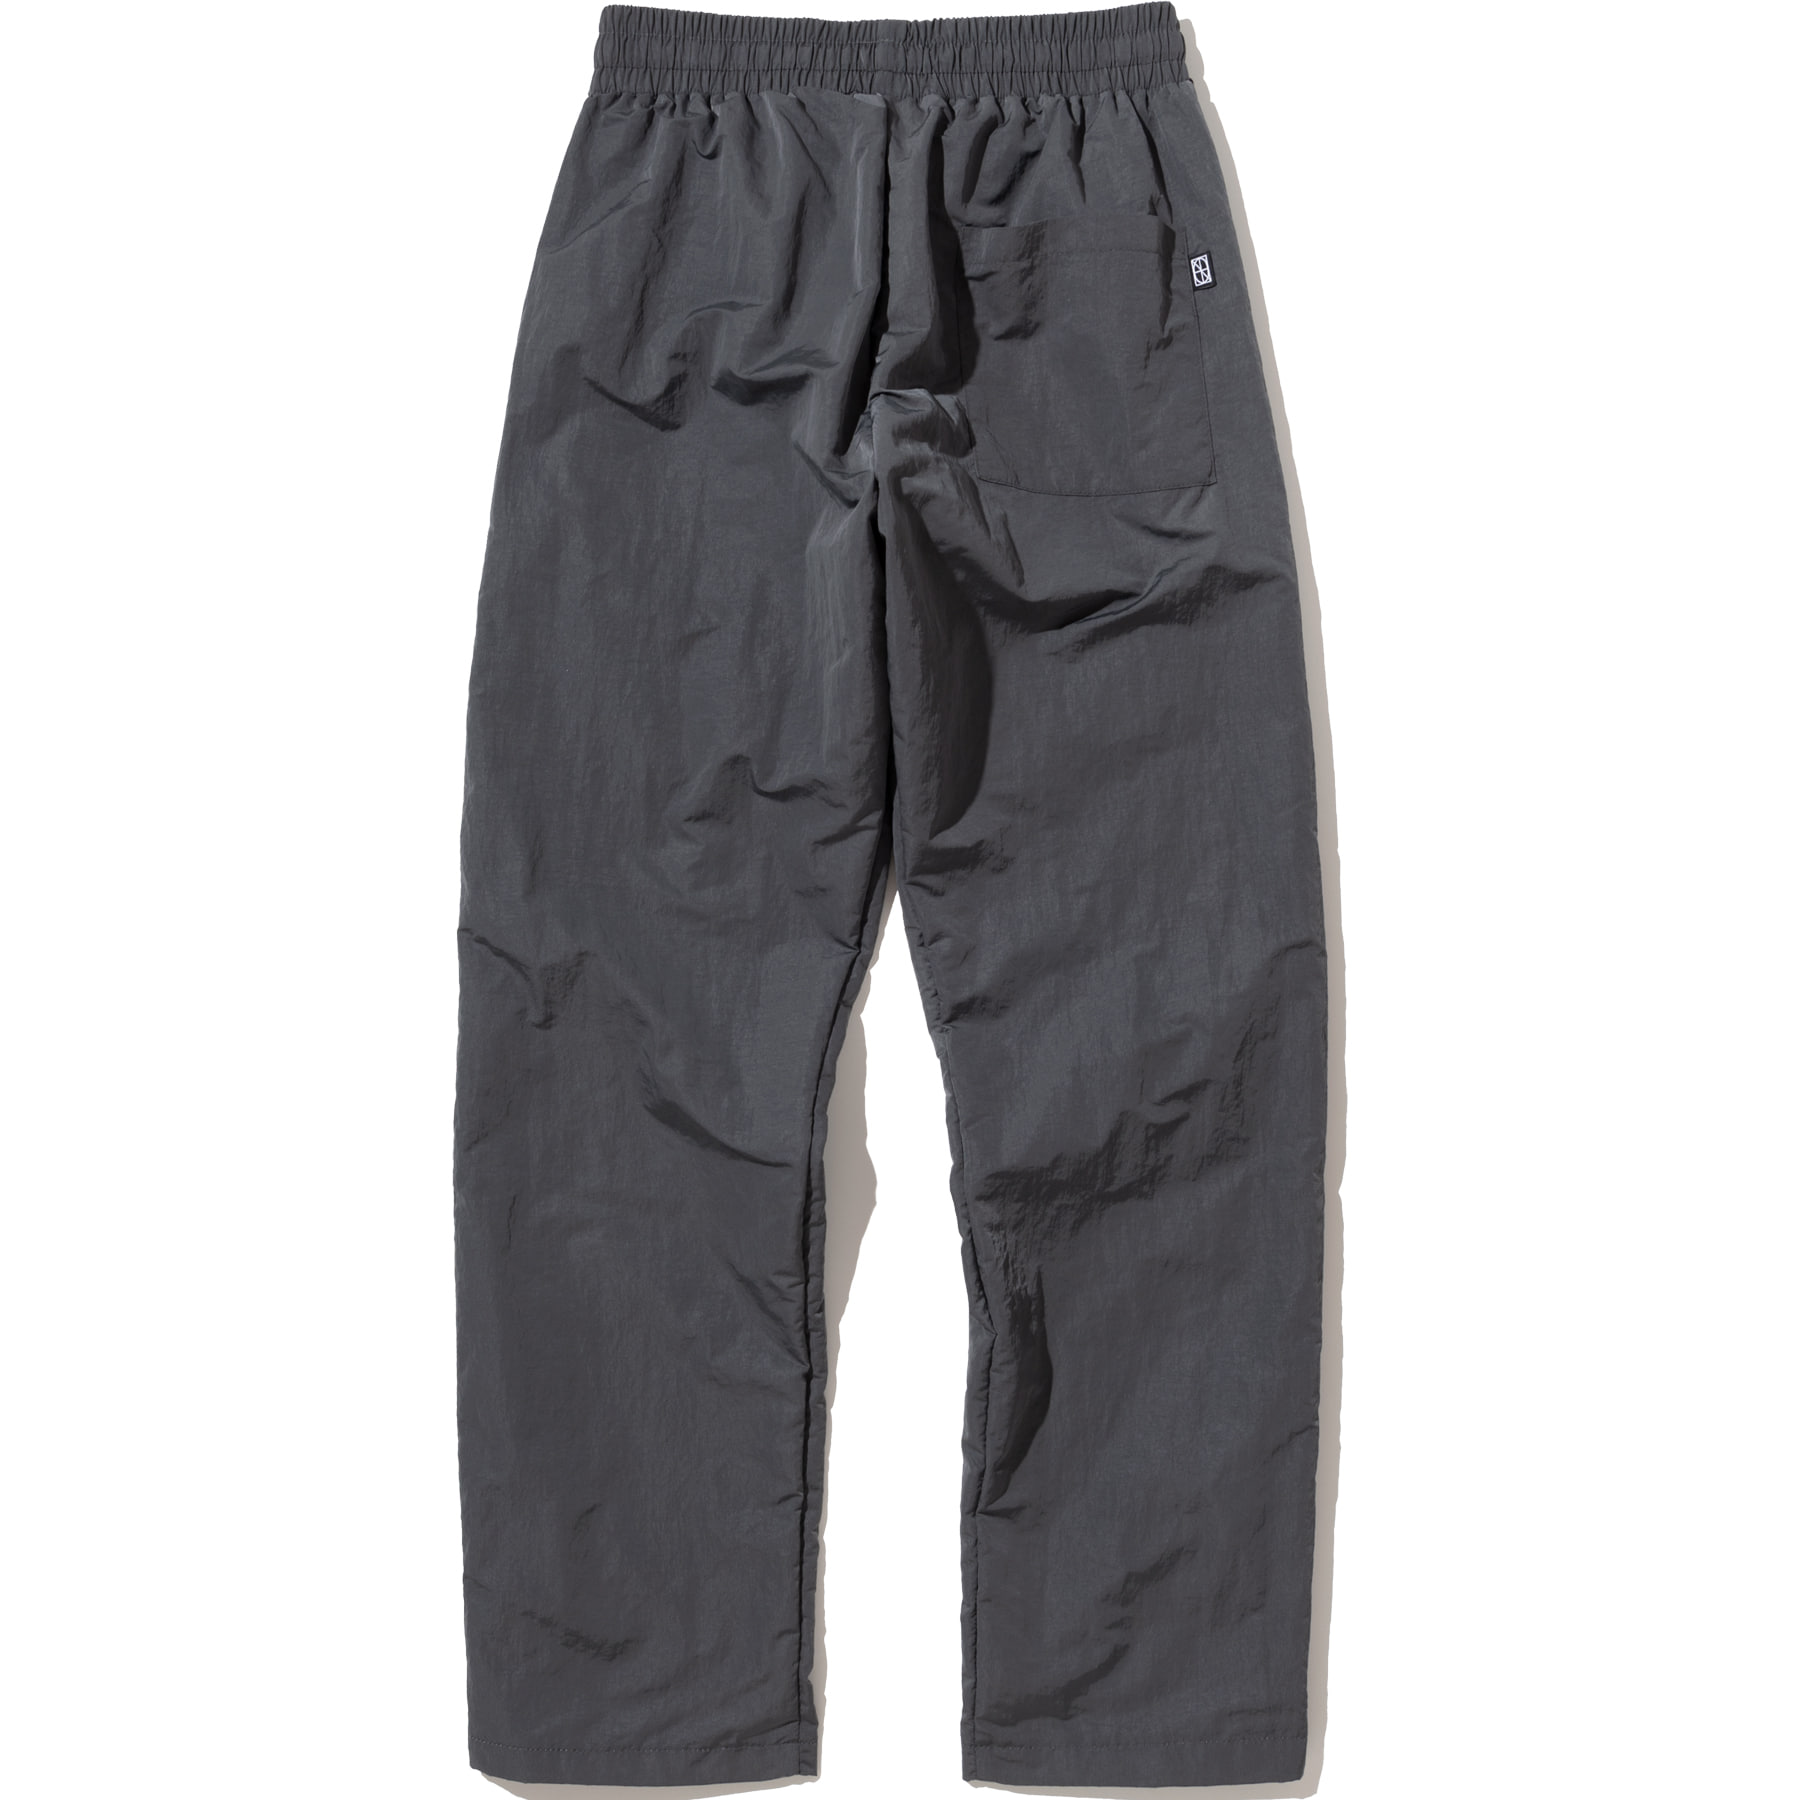 Two Way Side Zipper Nylon Pants - Dark Grey,NOT4NERD